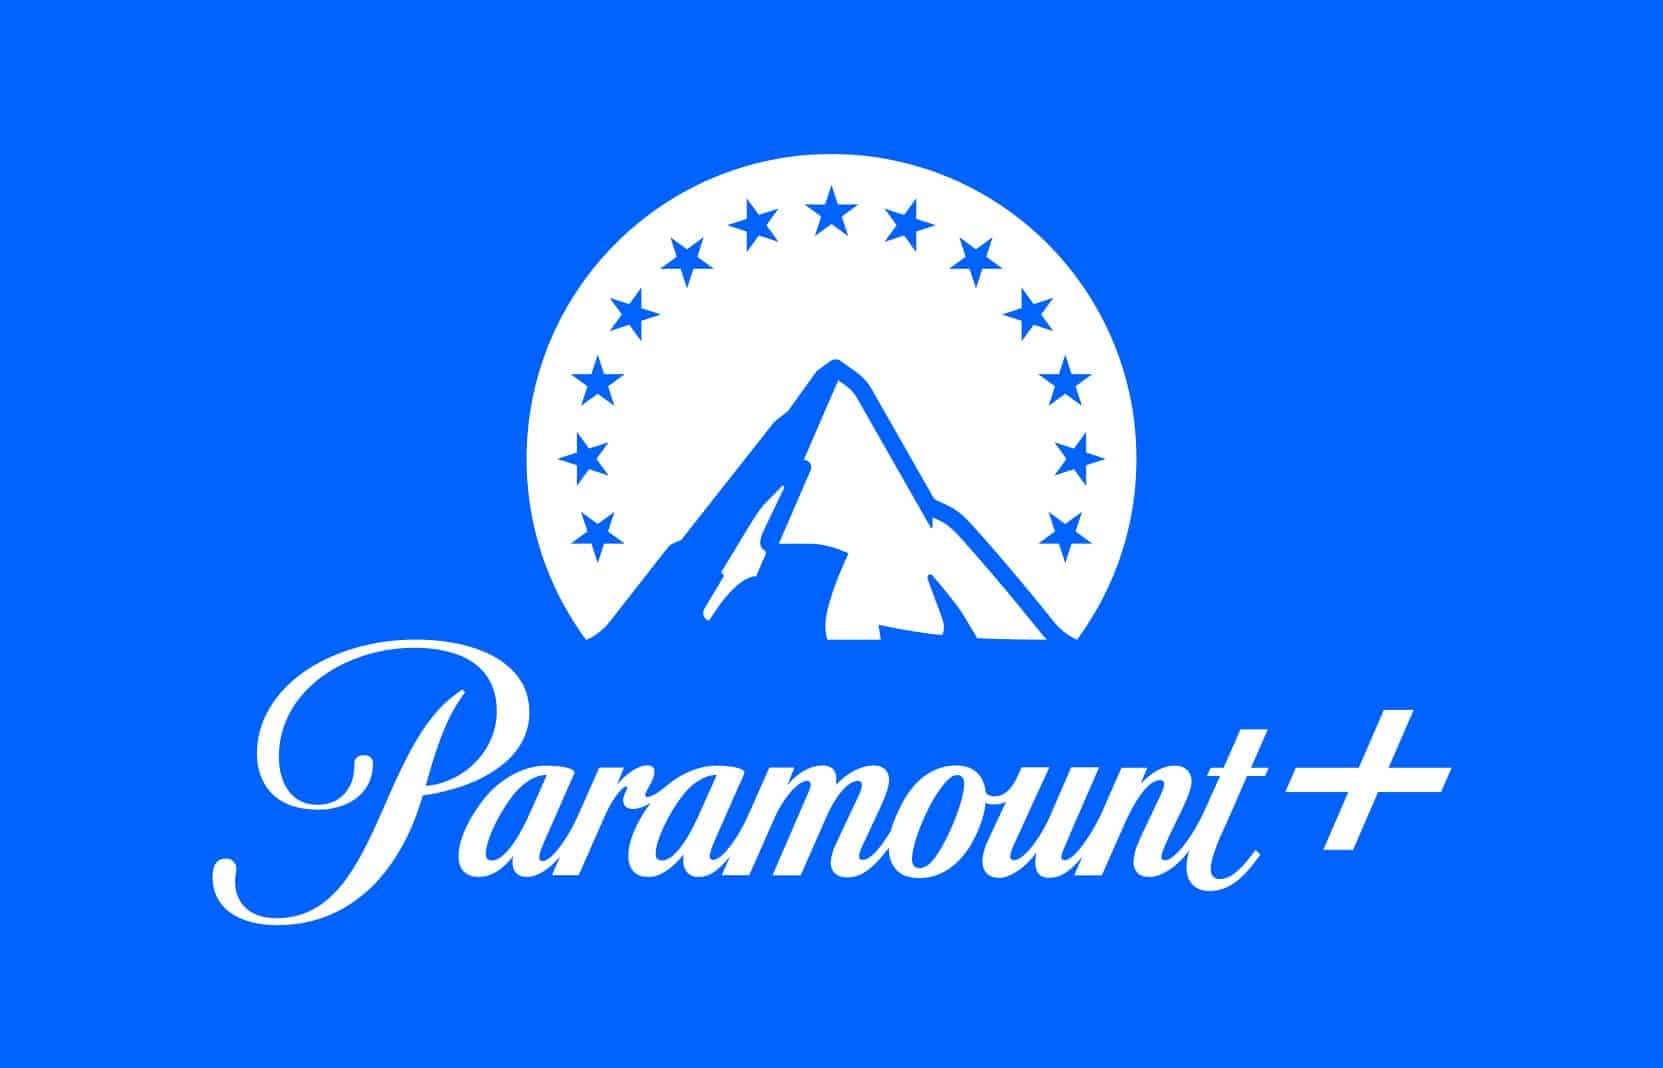 Top 5 Paramount+ Shows